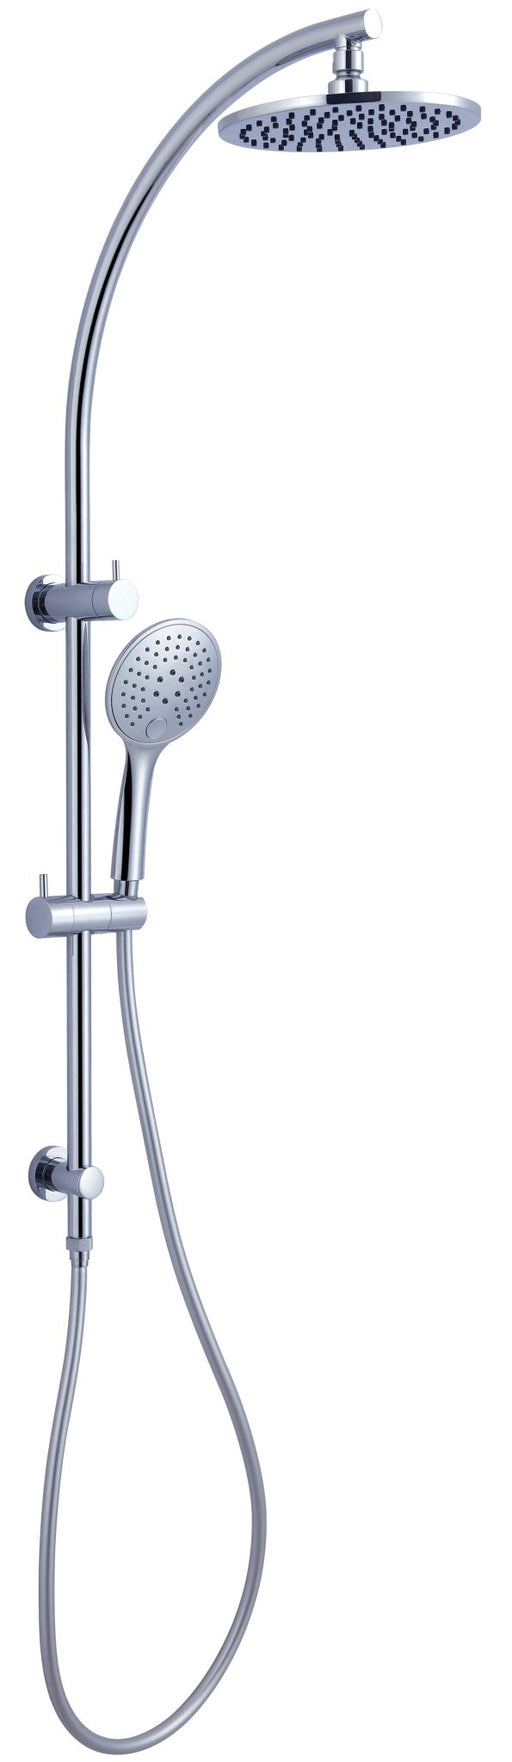 NERO DOLCE TWIN SHOWER CHROME - Ideal Bathroom CentreNR280705eCH